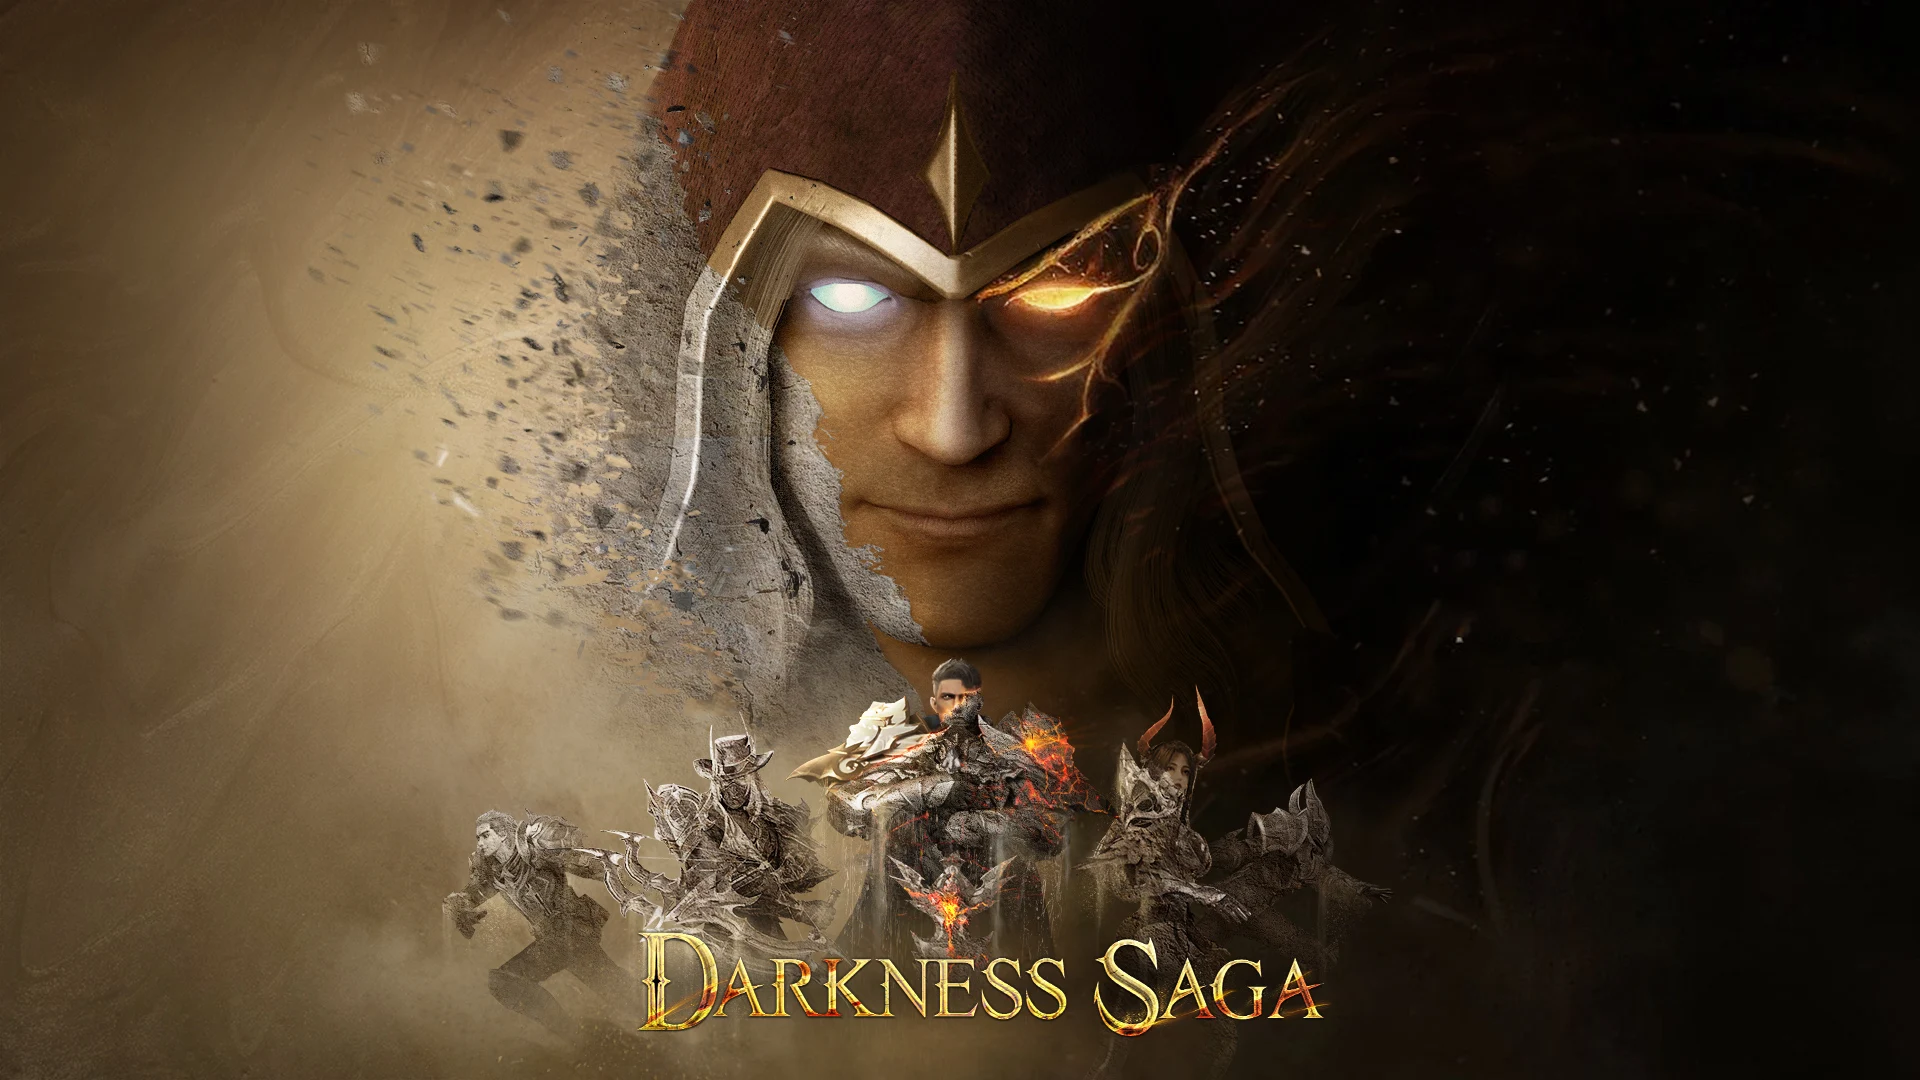 Darkness saga on PC